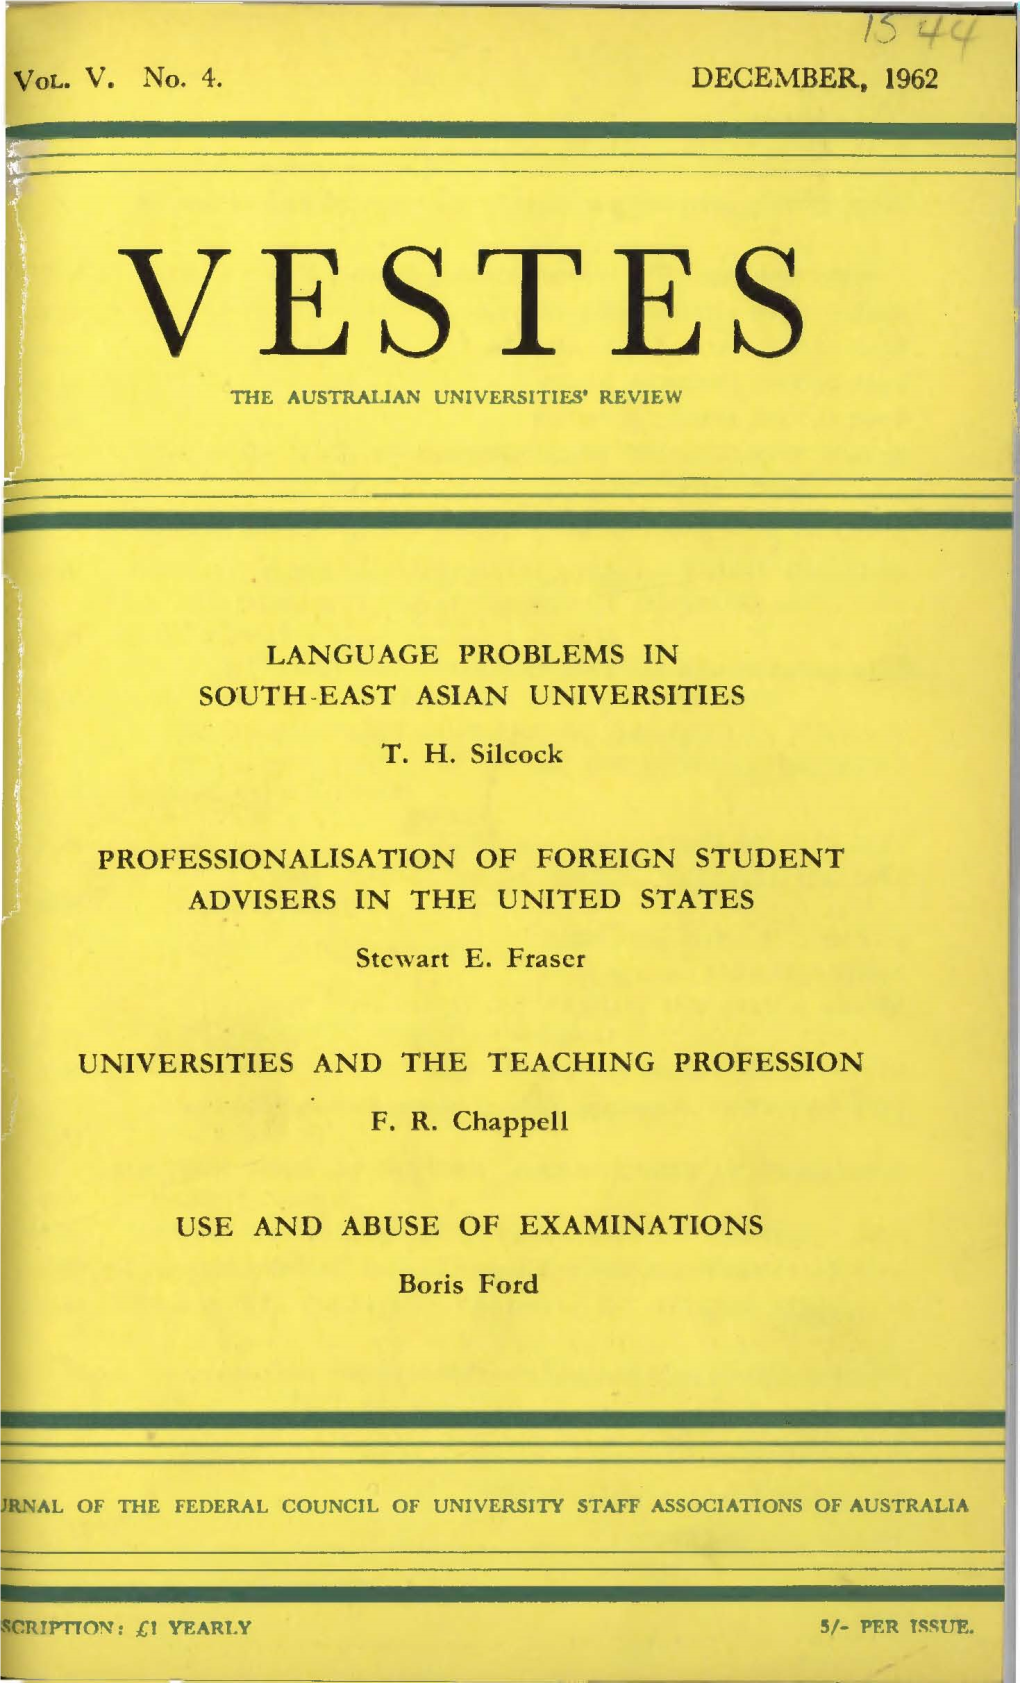 Vestes/The Australian Universities' Review Vol. 5, No. 4